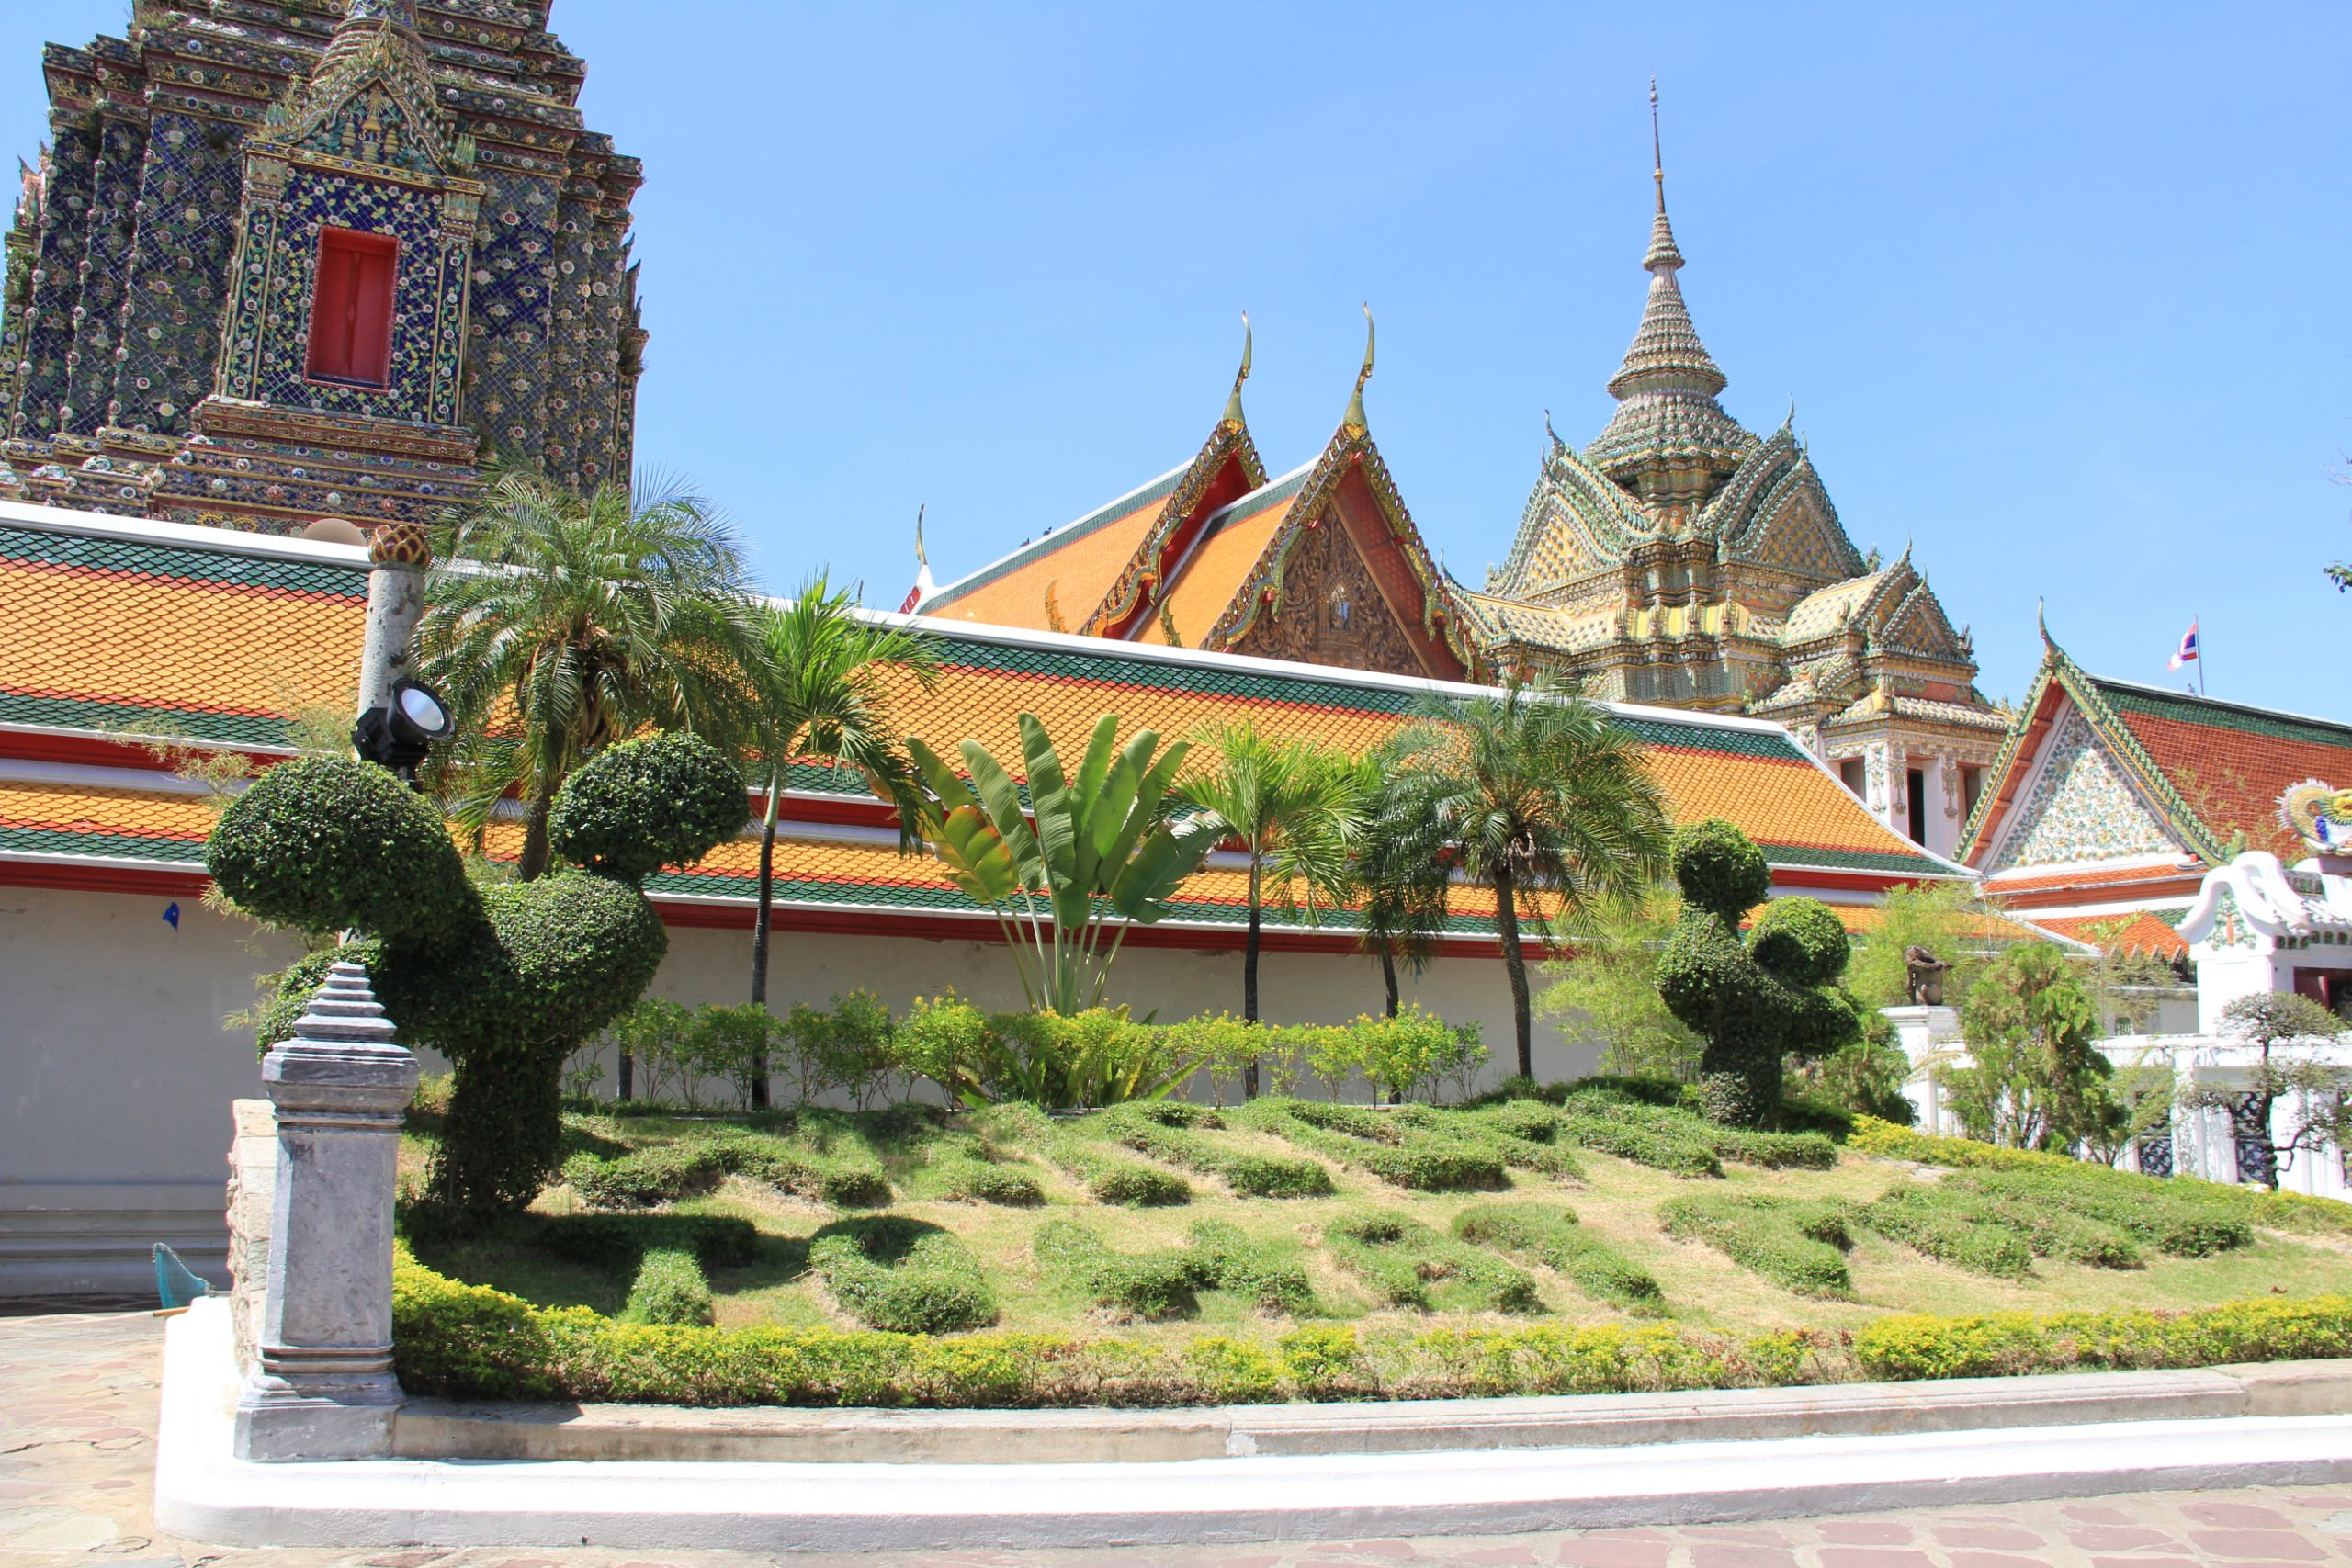 Бангкок дома. Королевский дворец Таиланд. Королевский дворец в Бангкоке. Королевский дворец — резиденция тайского короля.. Замок короля Бангкок.